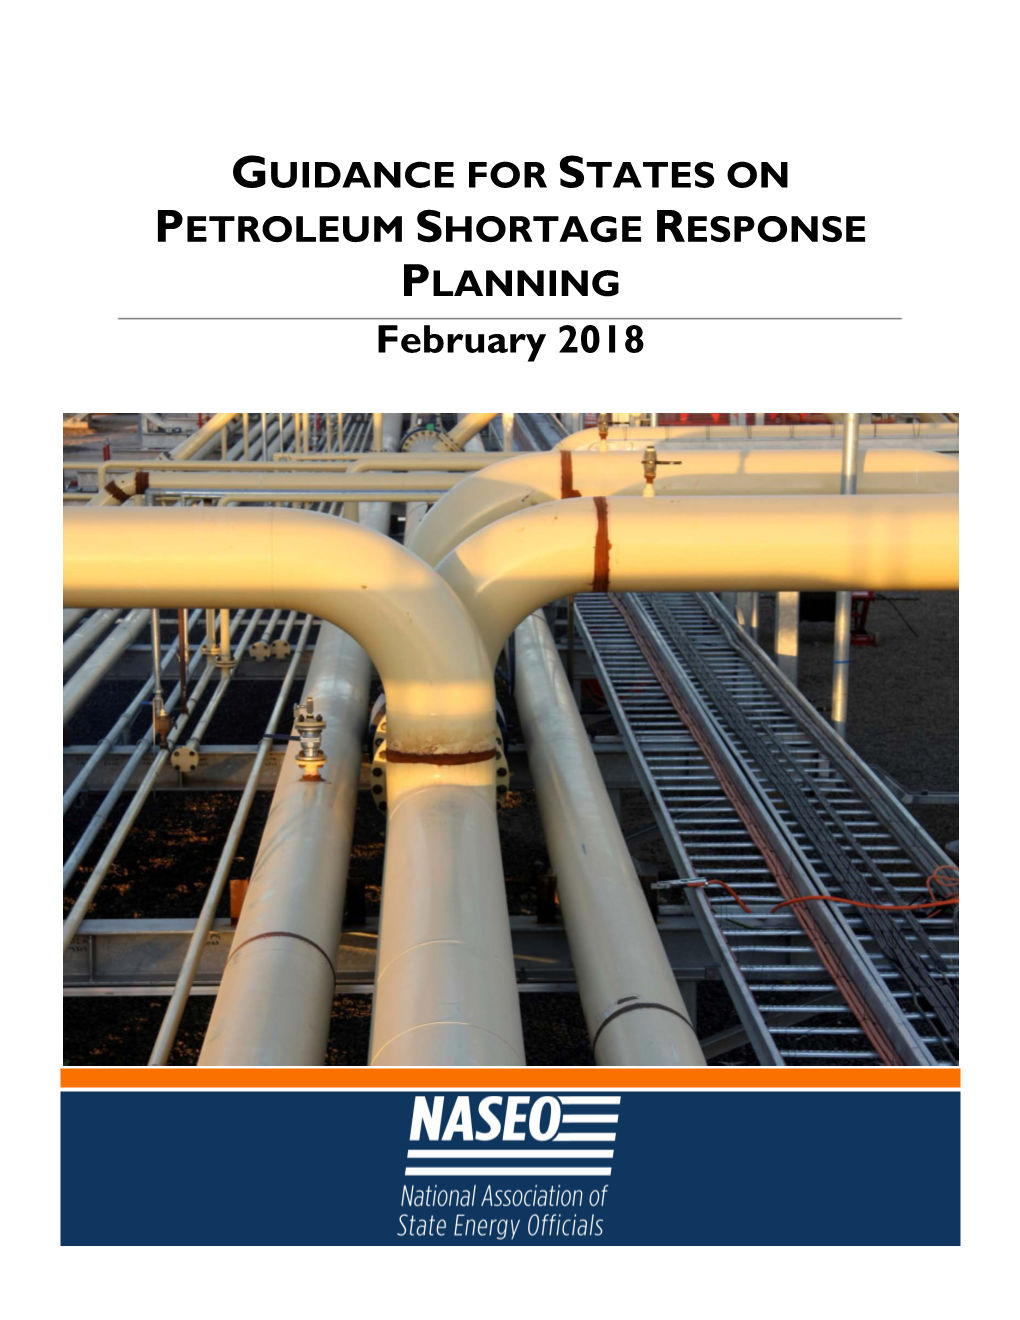 NASEO Guidance for States on Petroleum Shortage Response